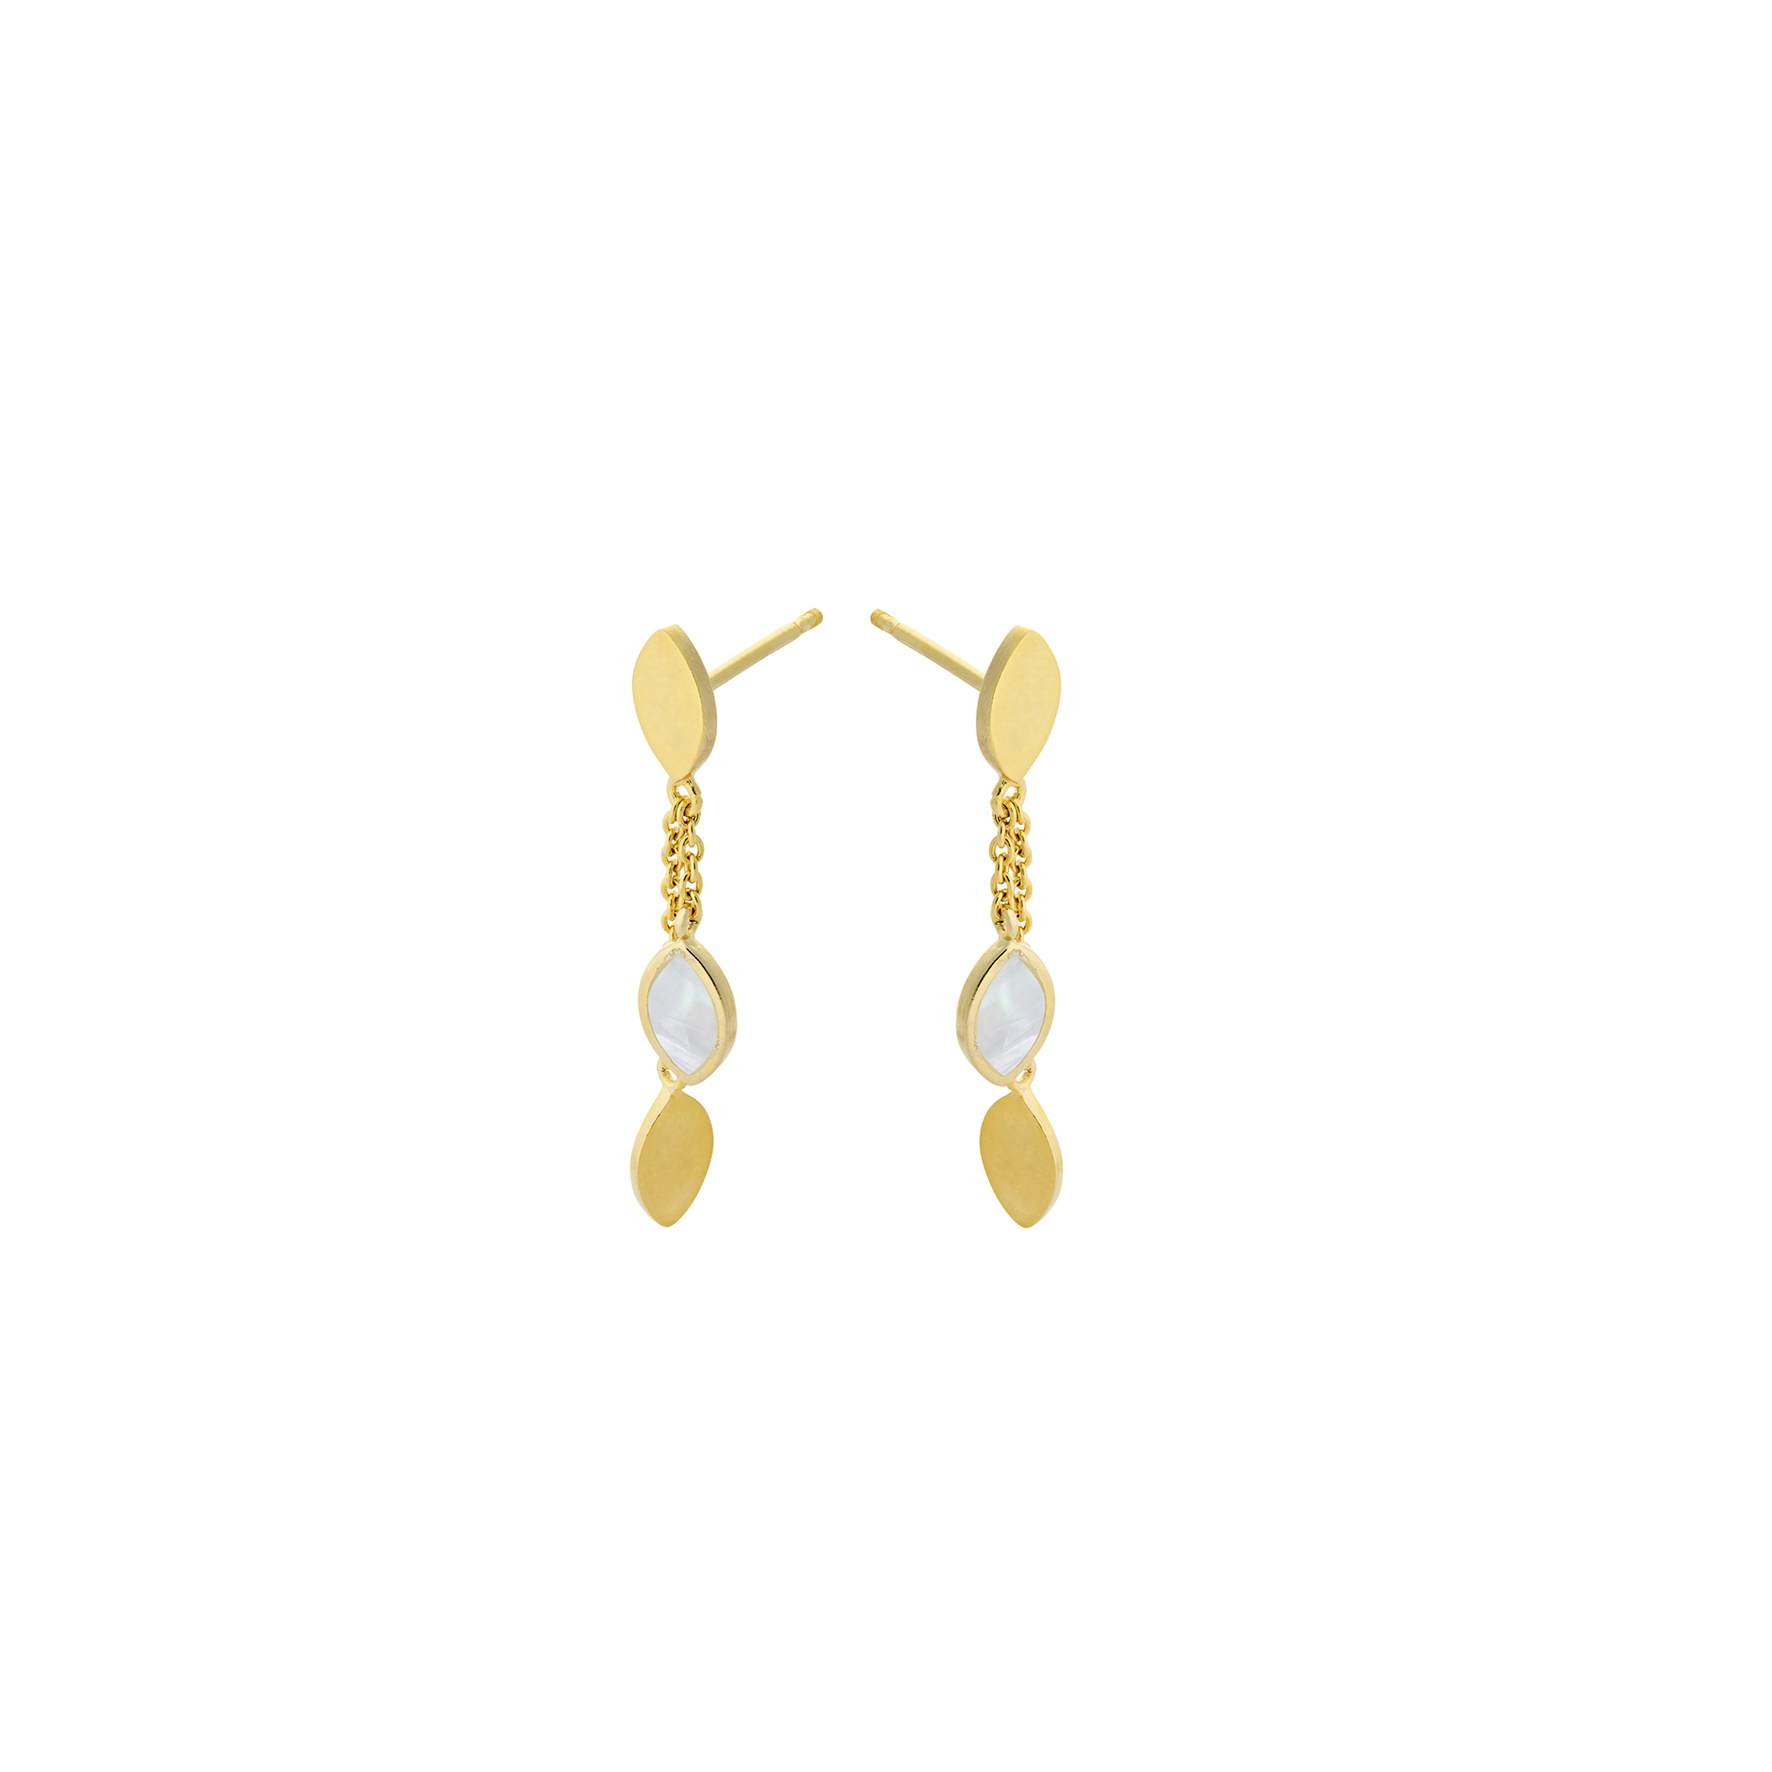 Flake Earrings from Pernille Corydon in Goldplated-Silver Sterling 925